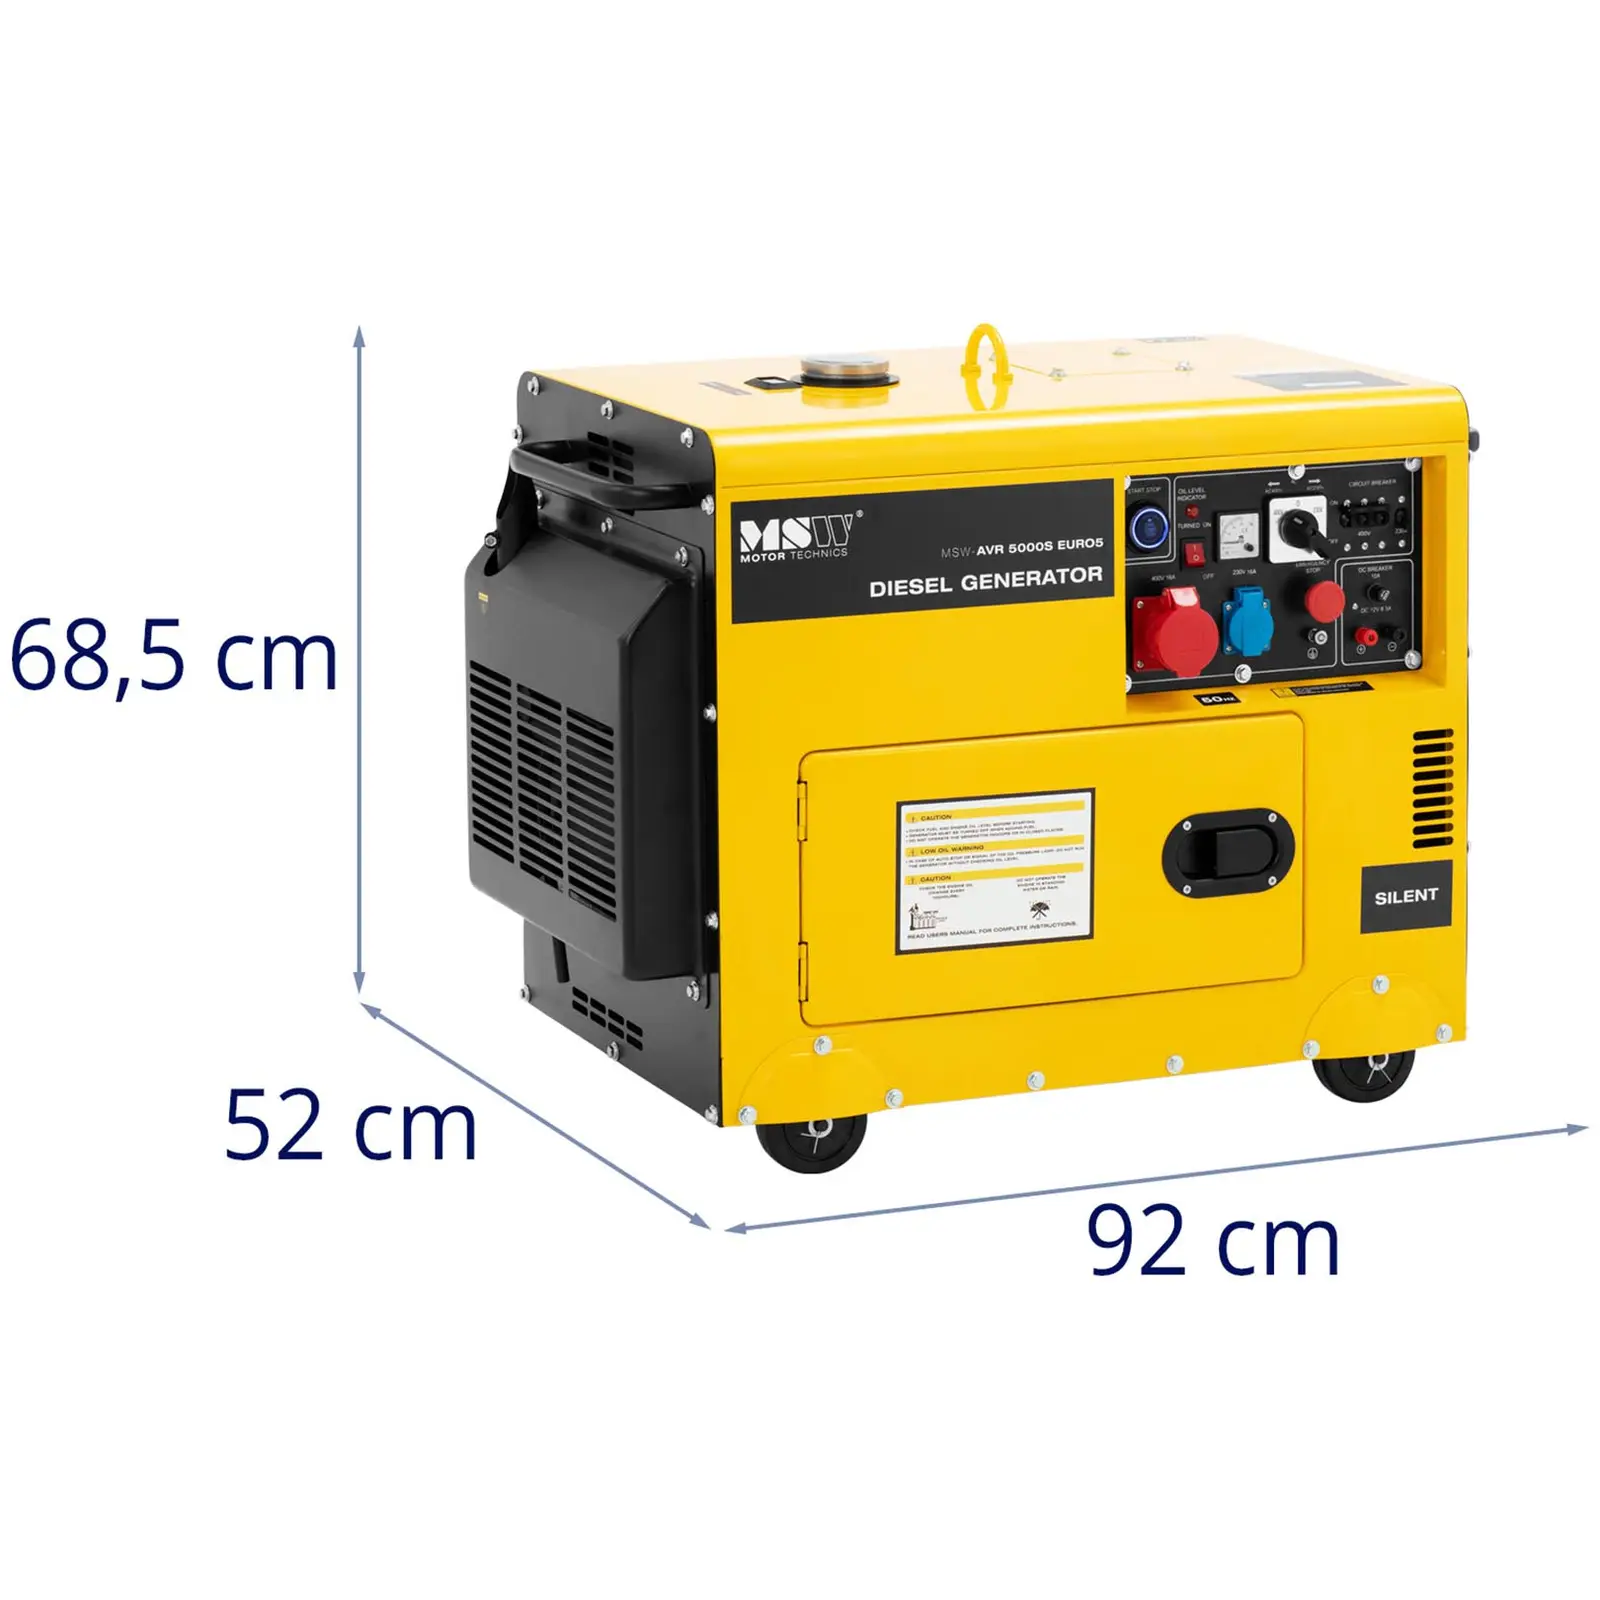 Notstromaggregat Diesel - 4250 / 5000 W - 16 L - 240/400 V - mobil - AVR - Euro 5